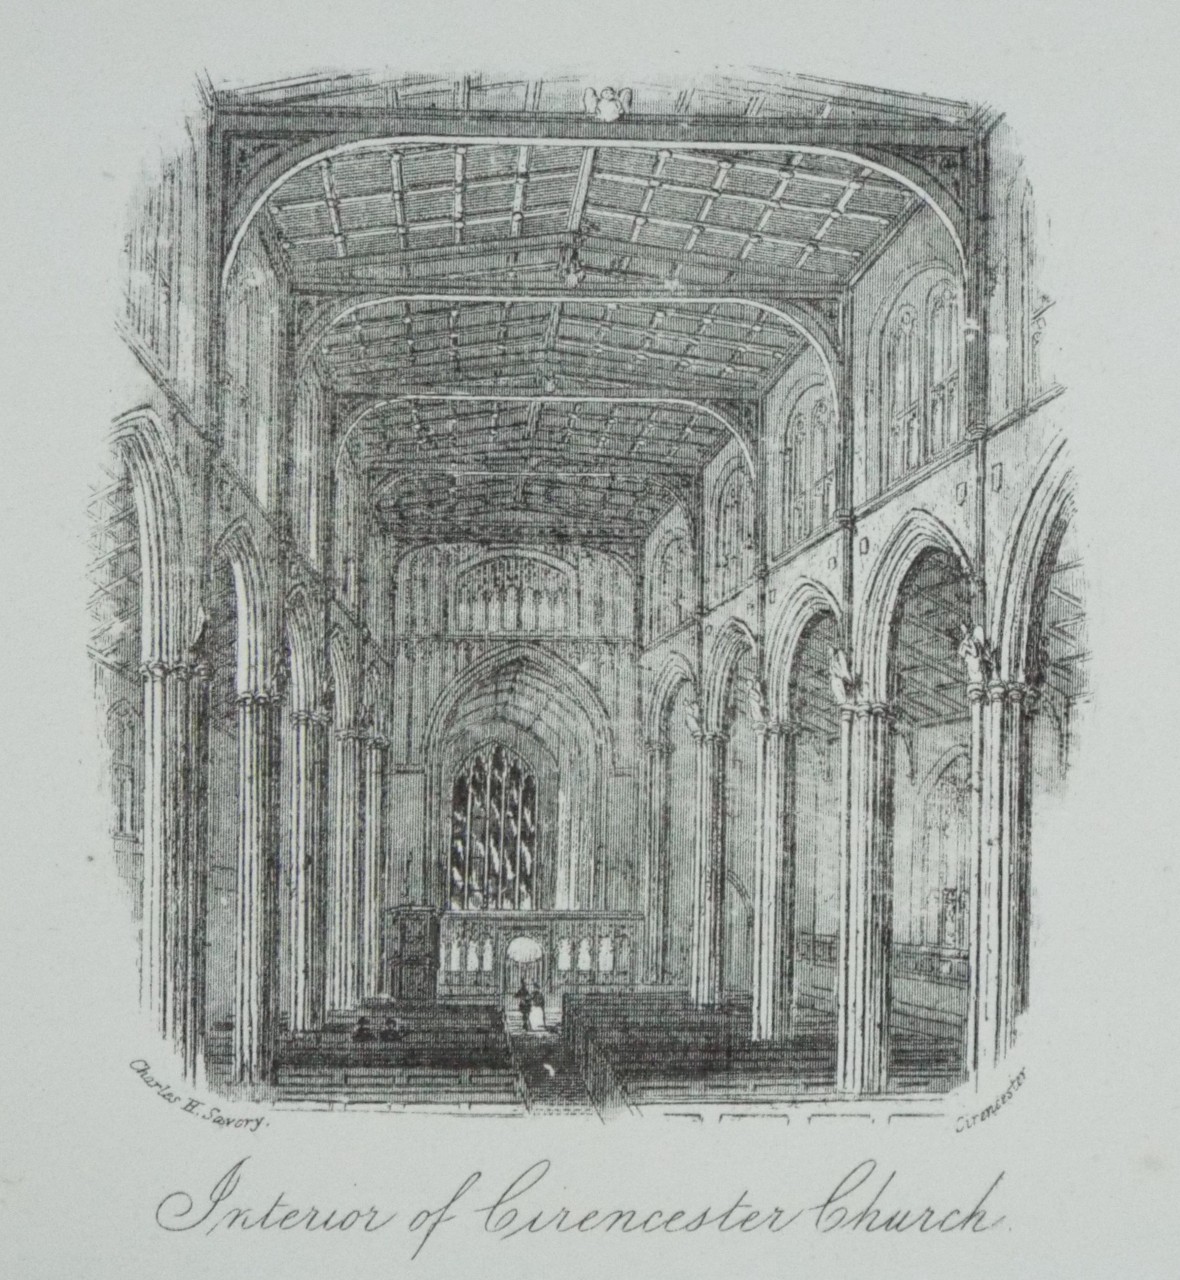 Steel Vignette - Interior of Cirencester C